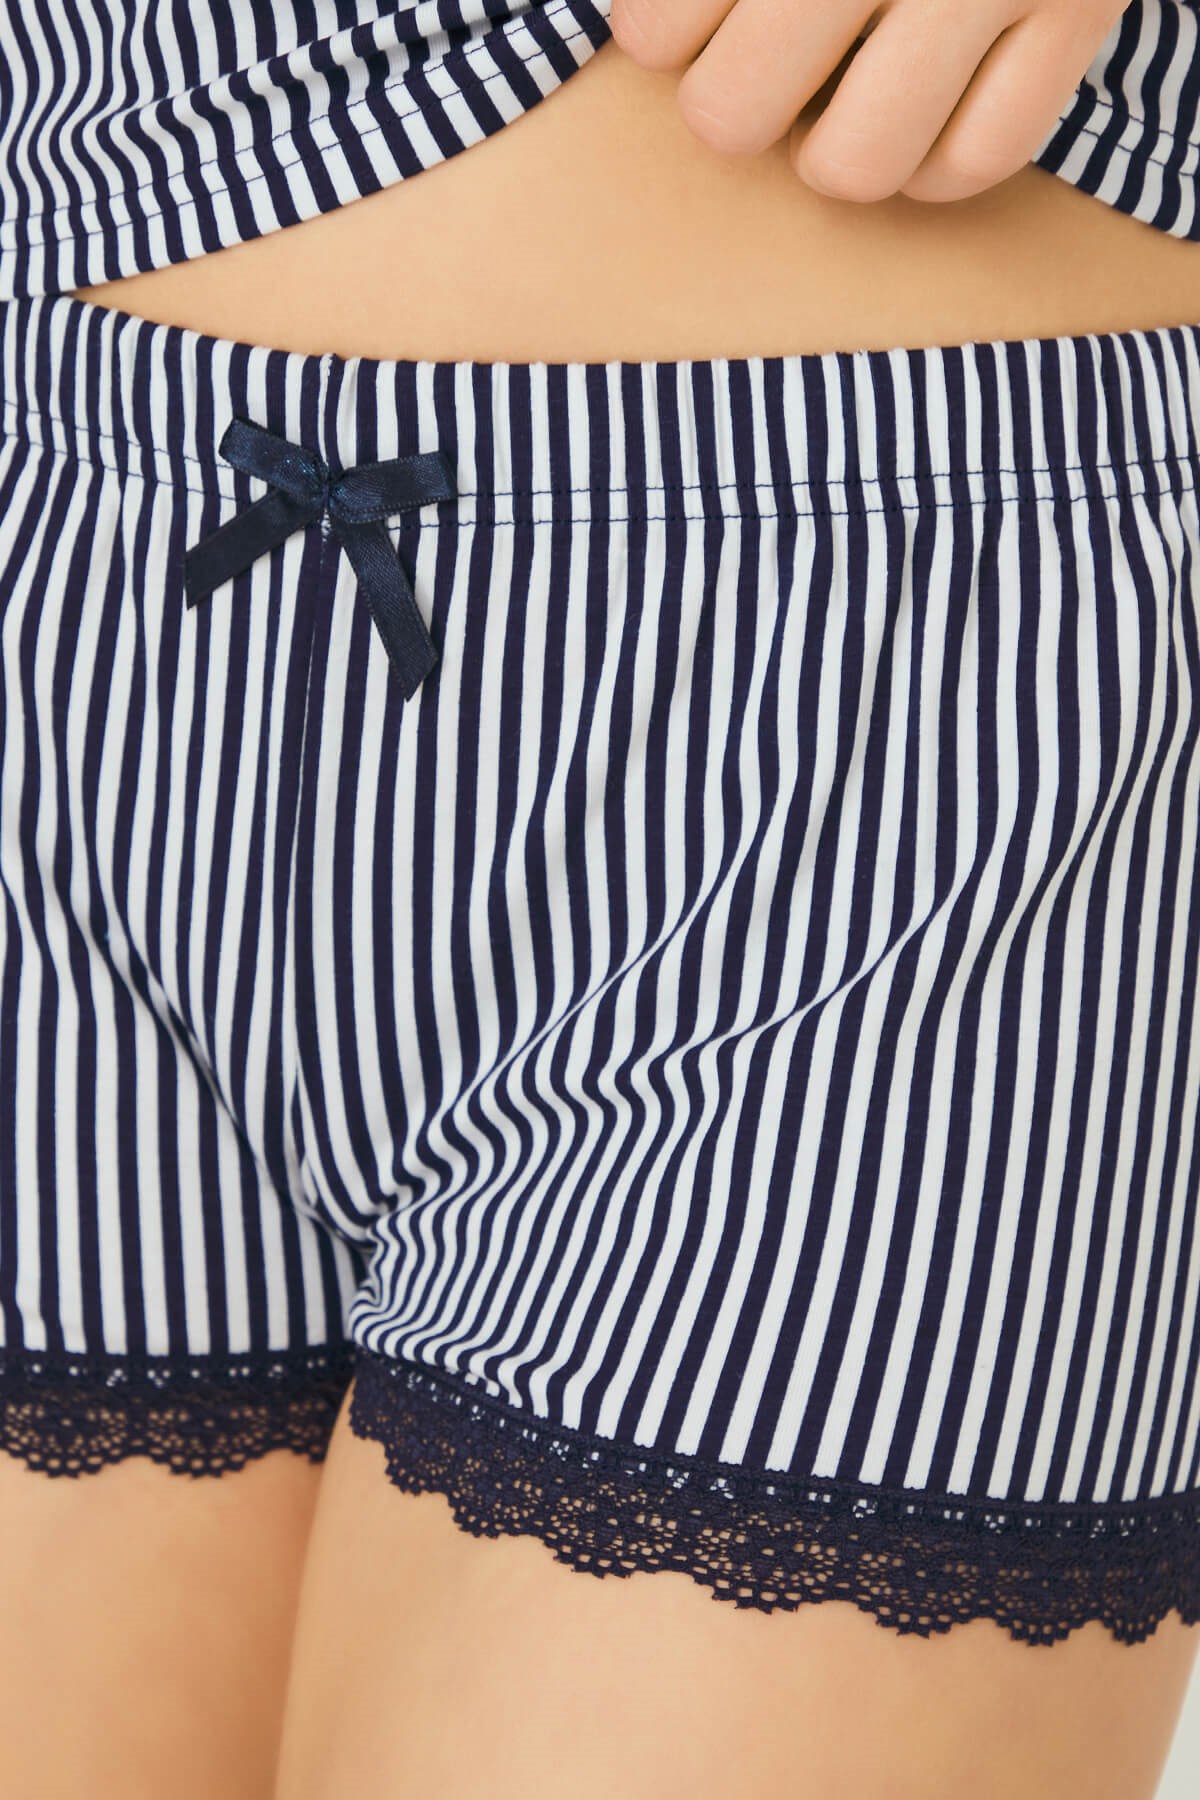 cotton-thin-striped-pajama-set-with-short-ch1507-emp328-1-2